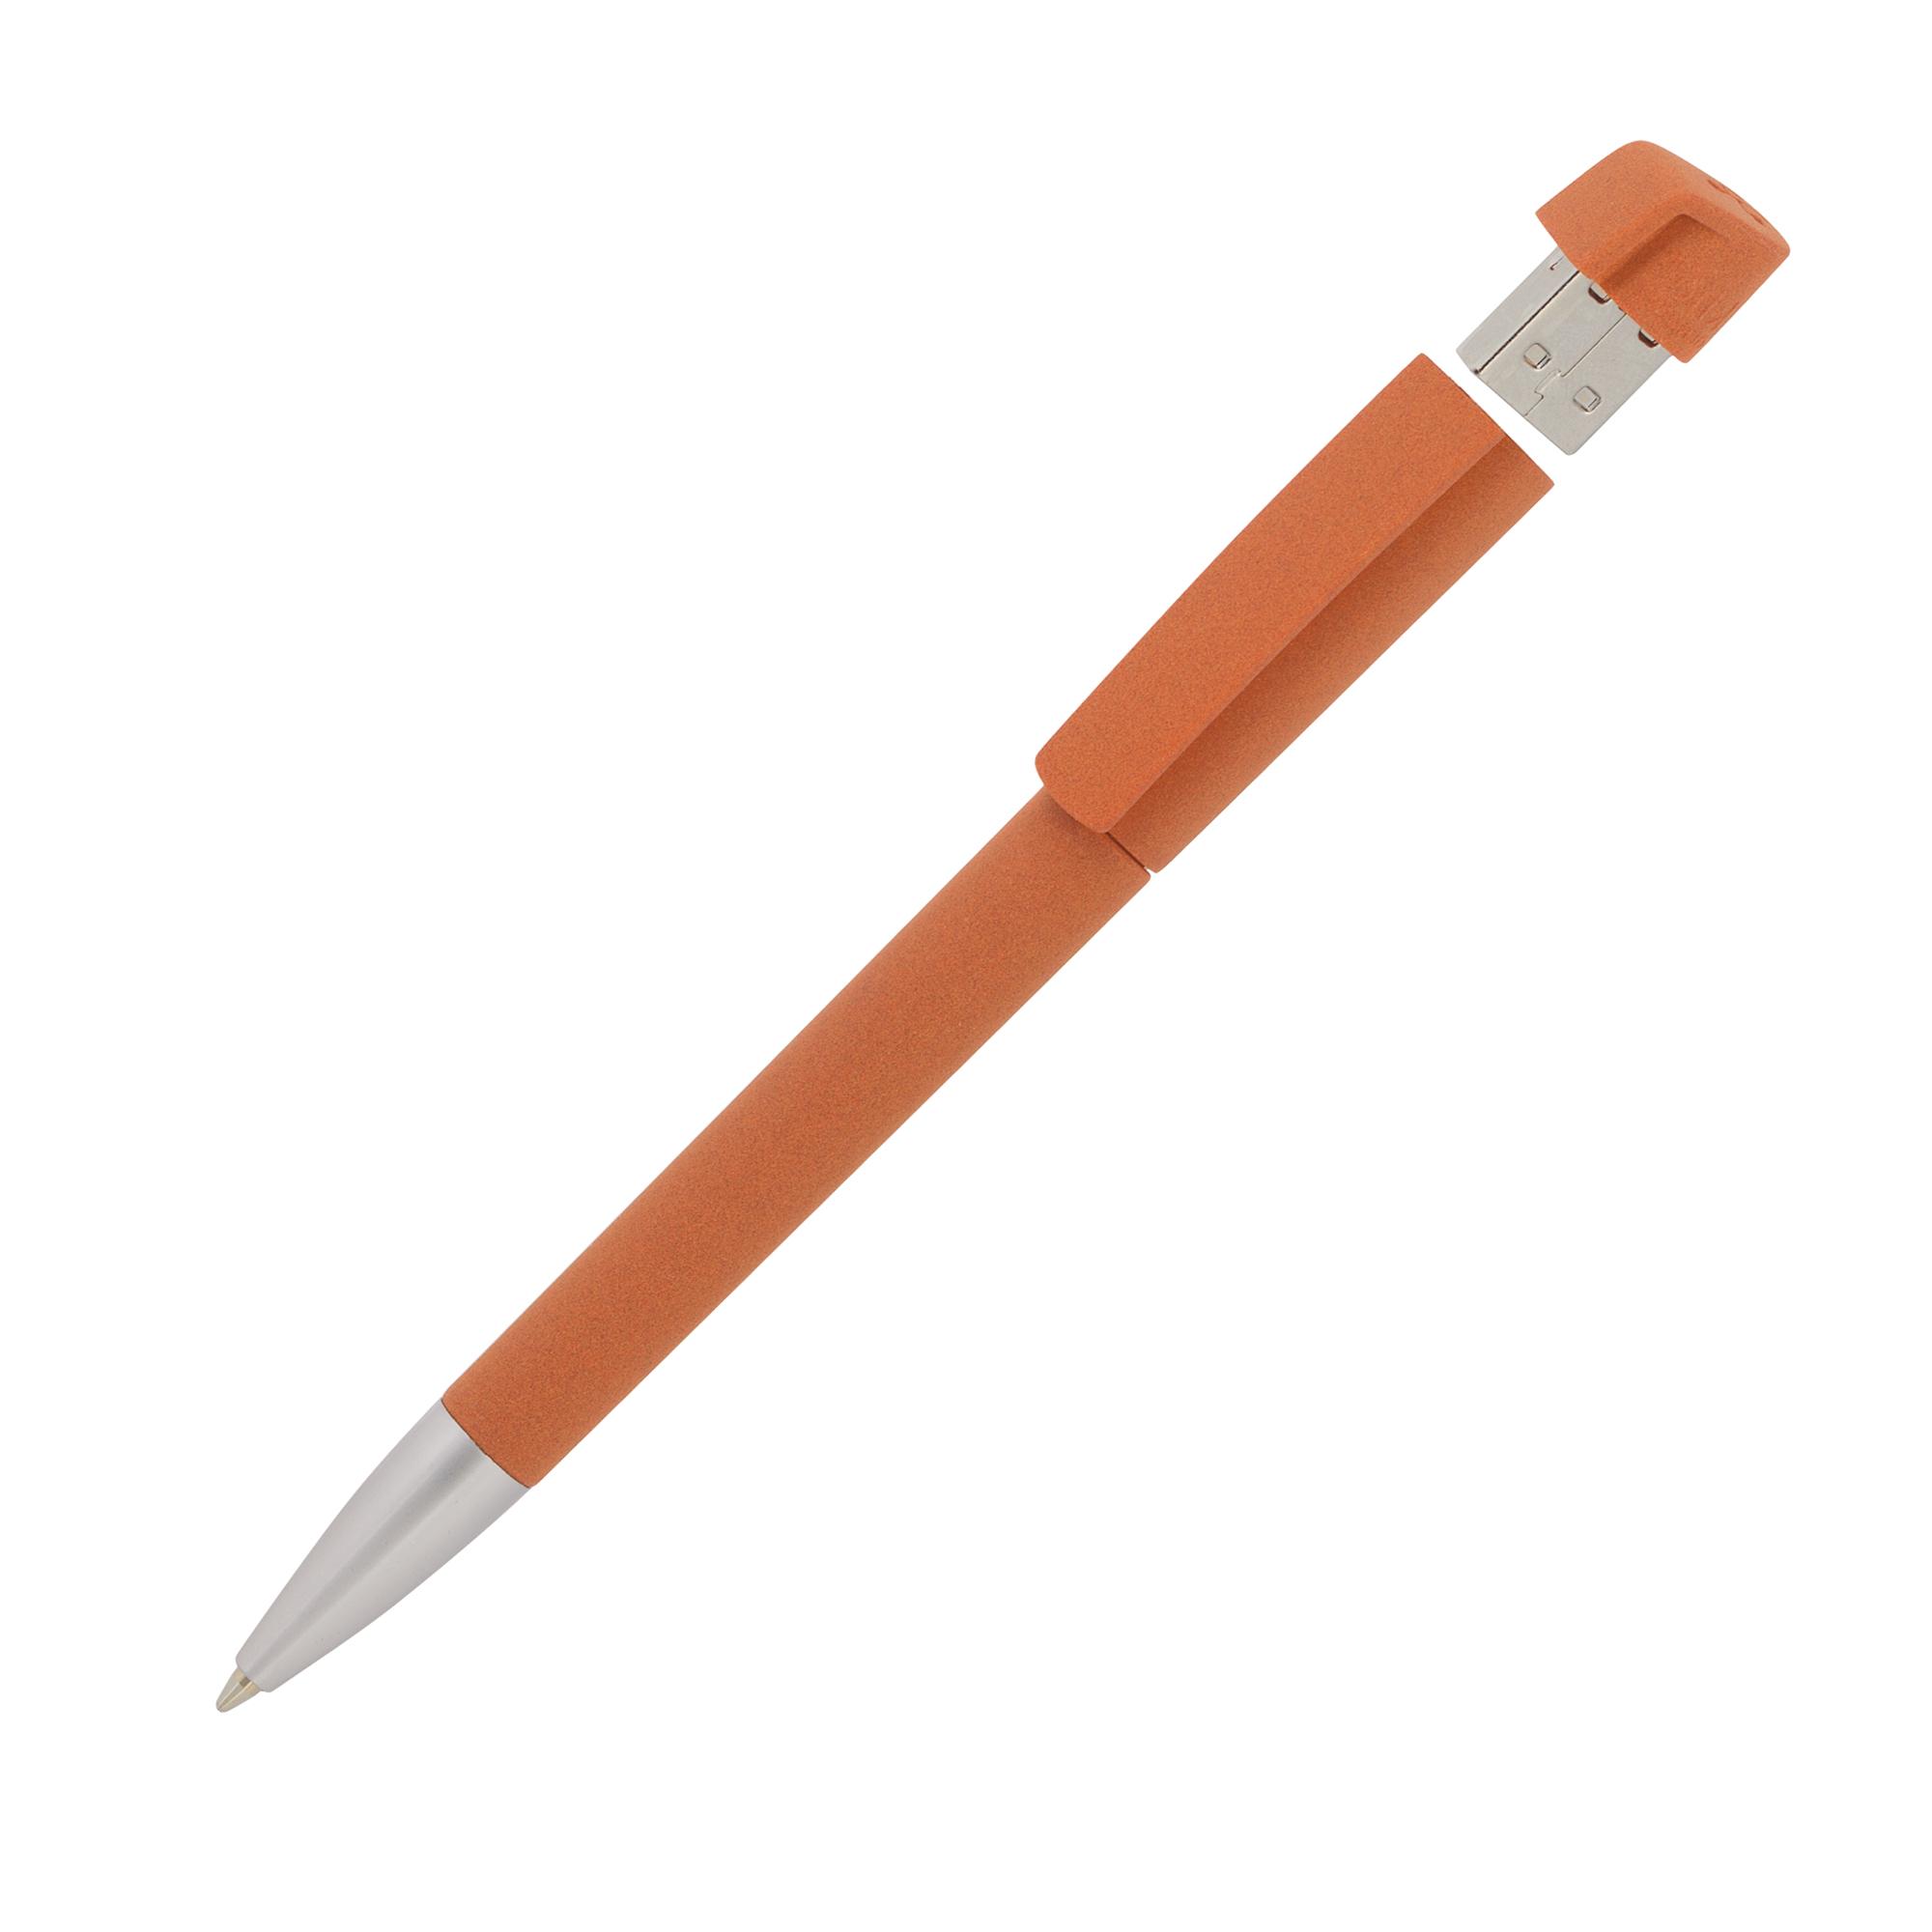 Ручка с флеш-картой USB 8GB «TURNUSsoftgrip M», цвет оранжевый, фото 1